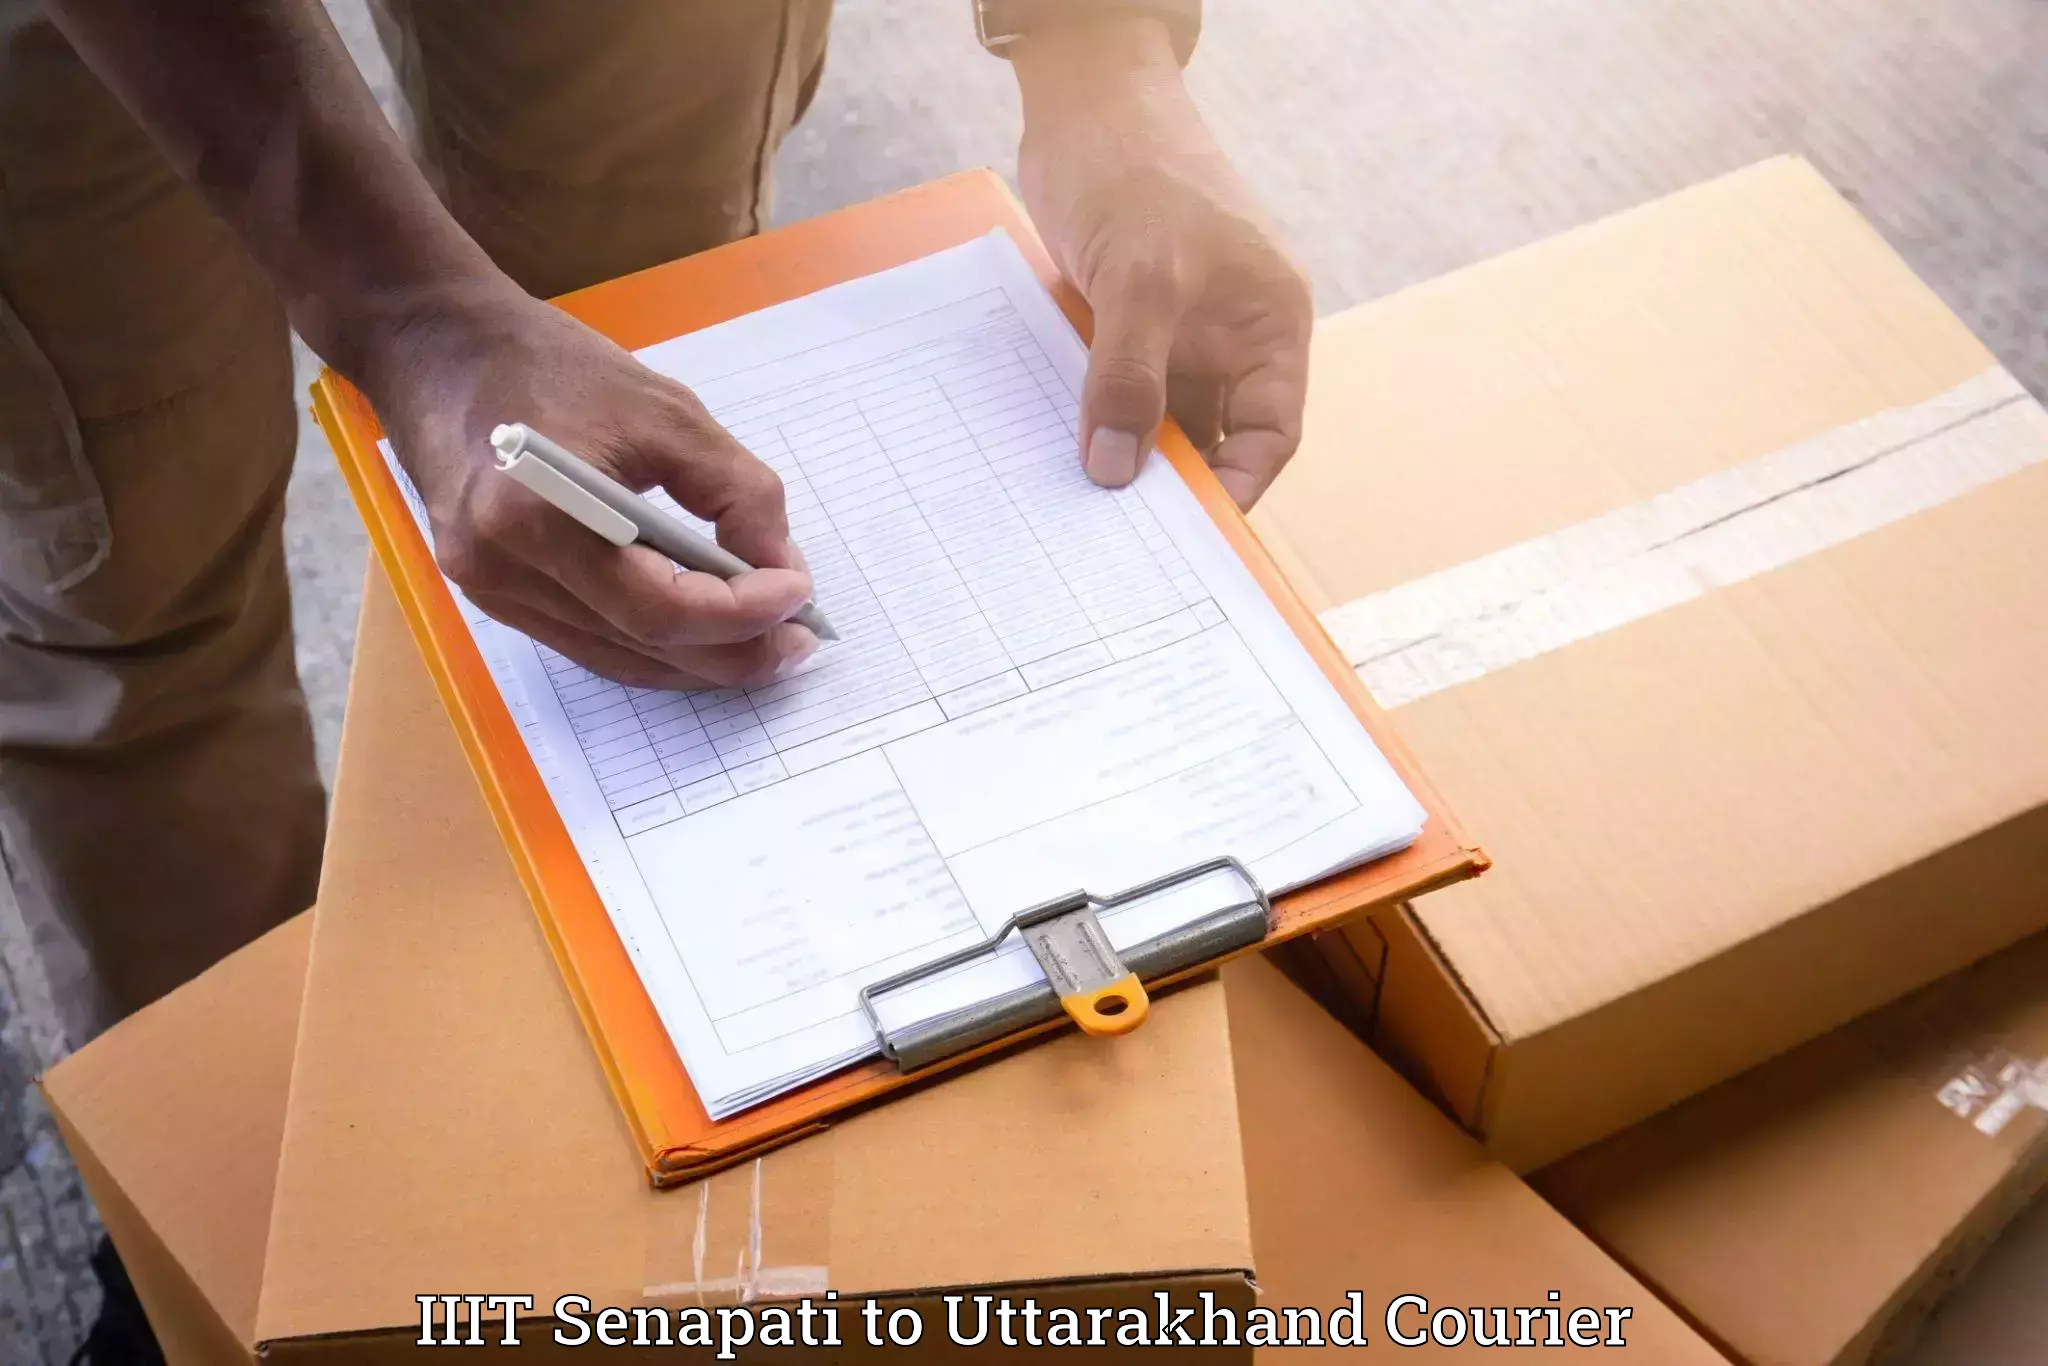 Furniture moving specialists IIIT Senapati to Uttarakhand